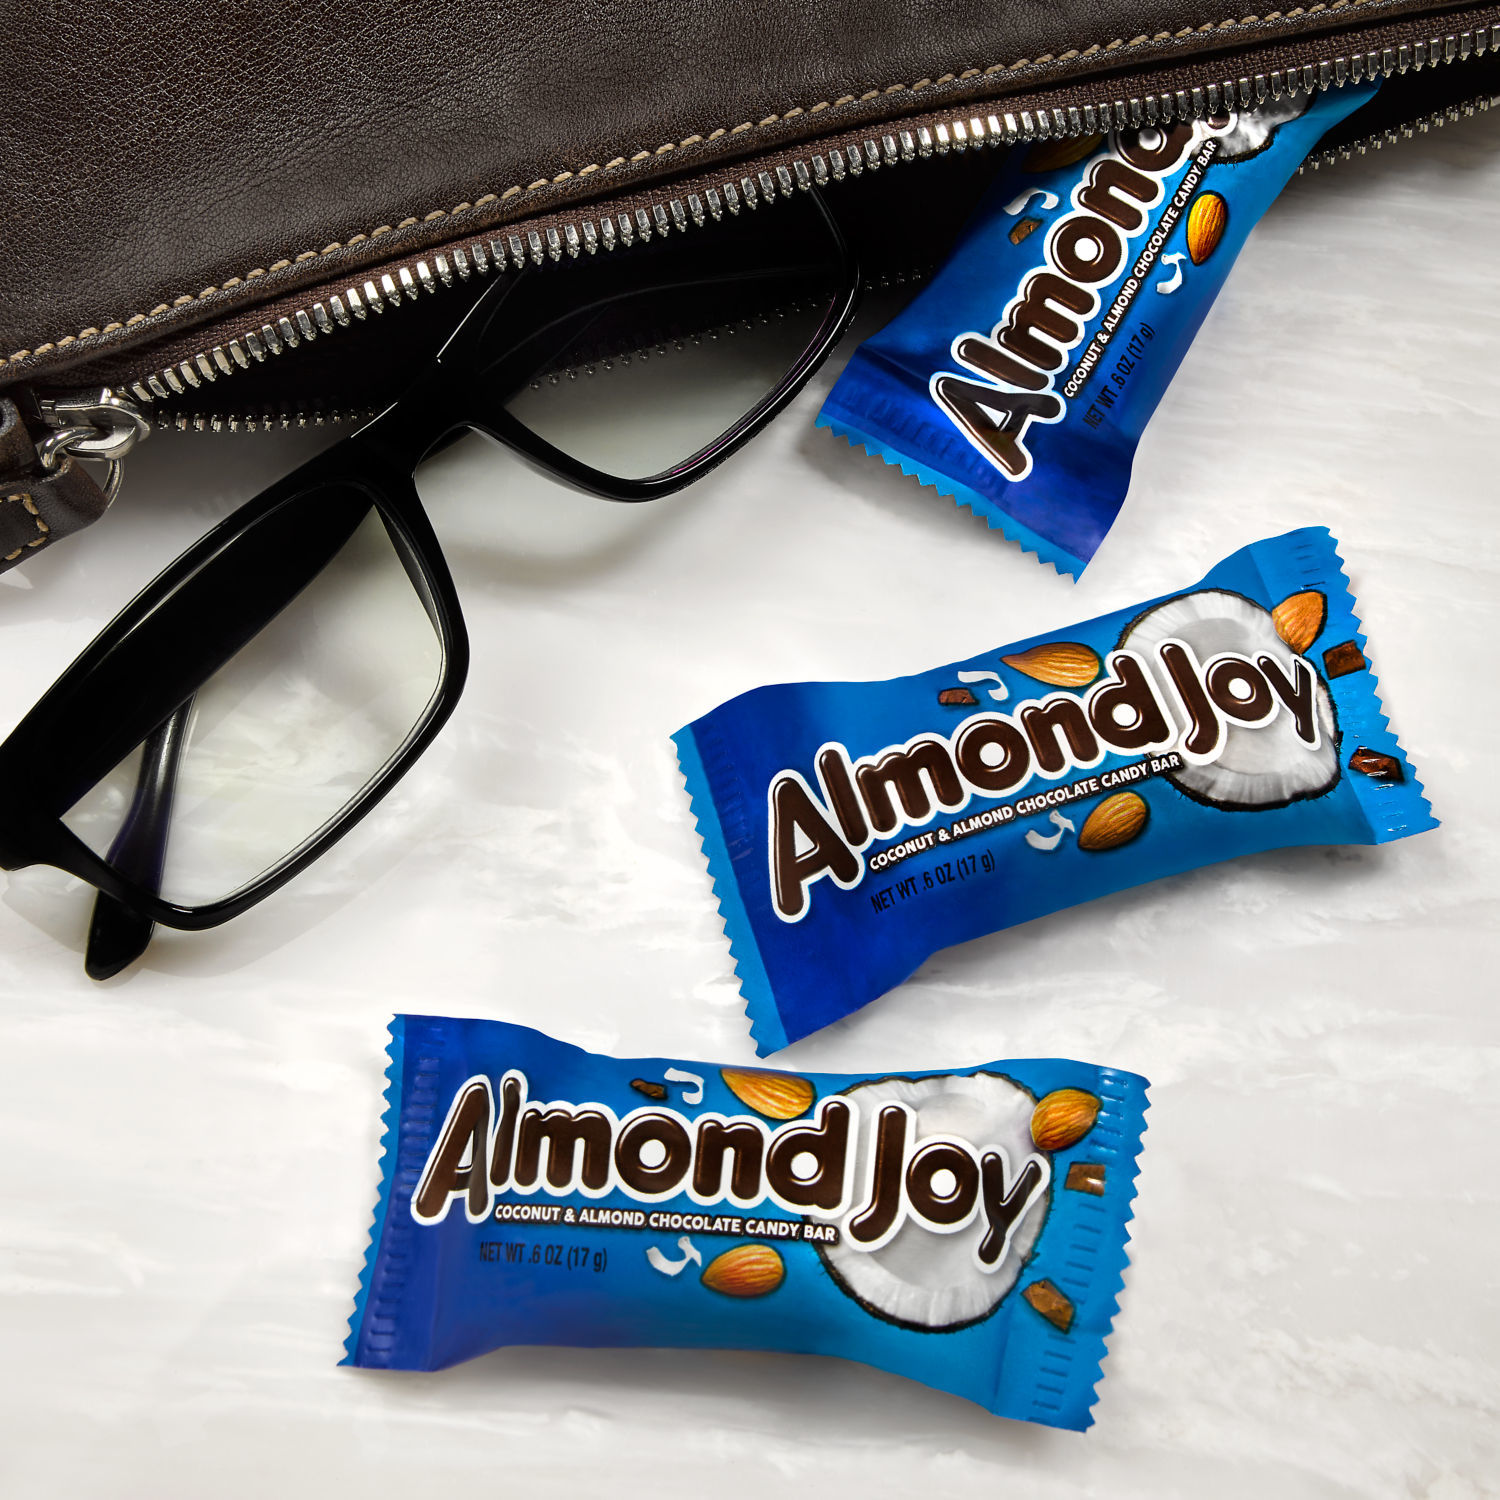 Almond Joy Coconut and Almond Chocolate Snack Size Candy, Jumbo Bag 20.1 oz - image 4 of 7